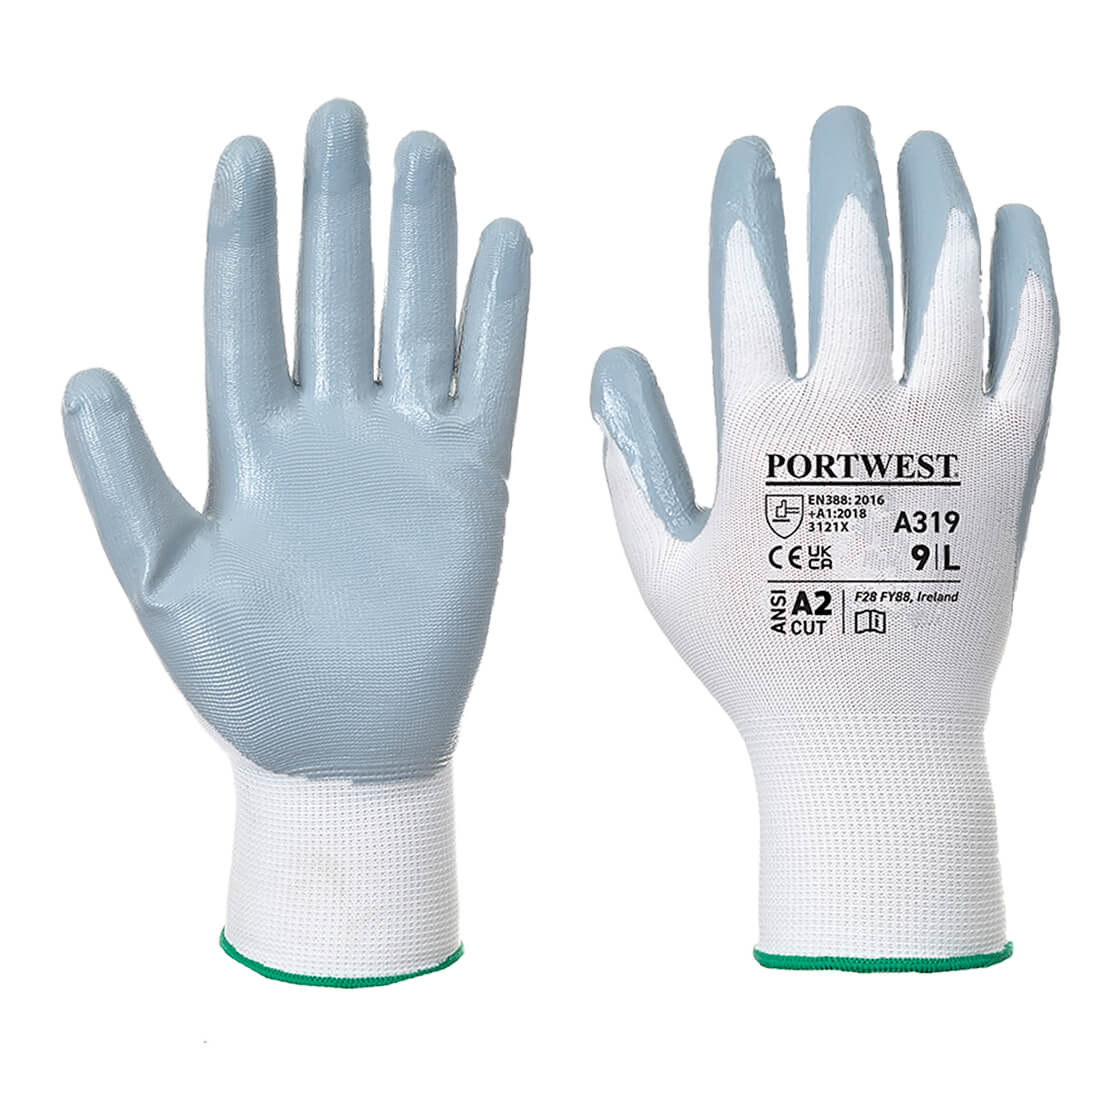 Portwest A319 Flexo Grip Nitrile Glove (Retail Pack) for General Handling